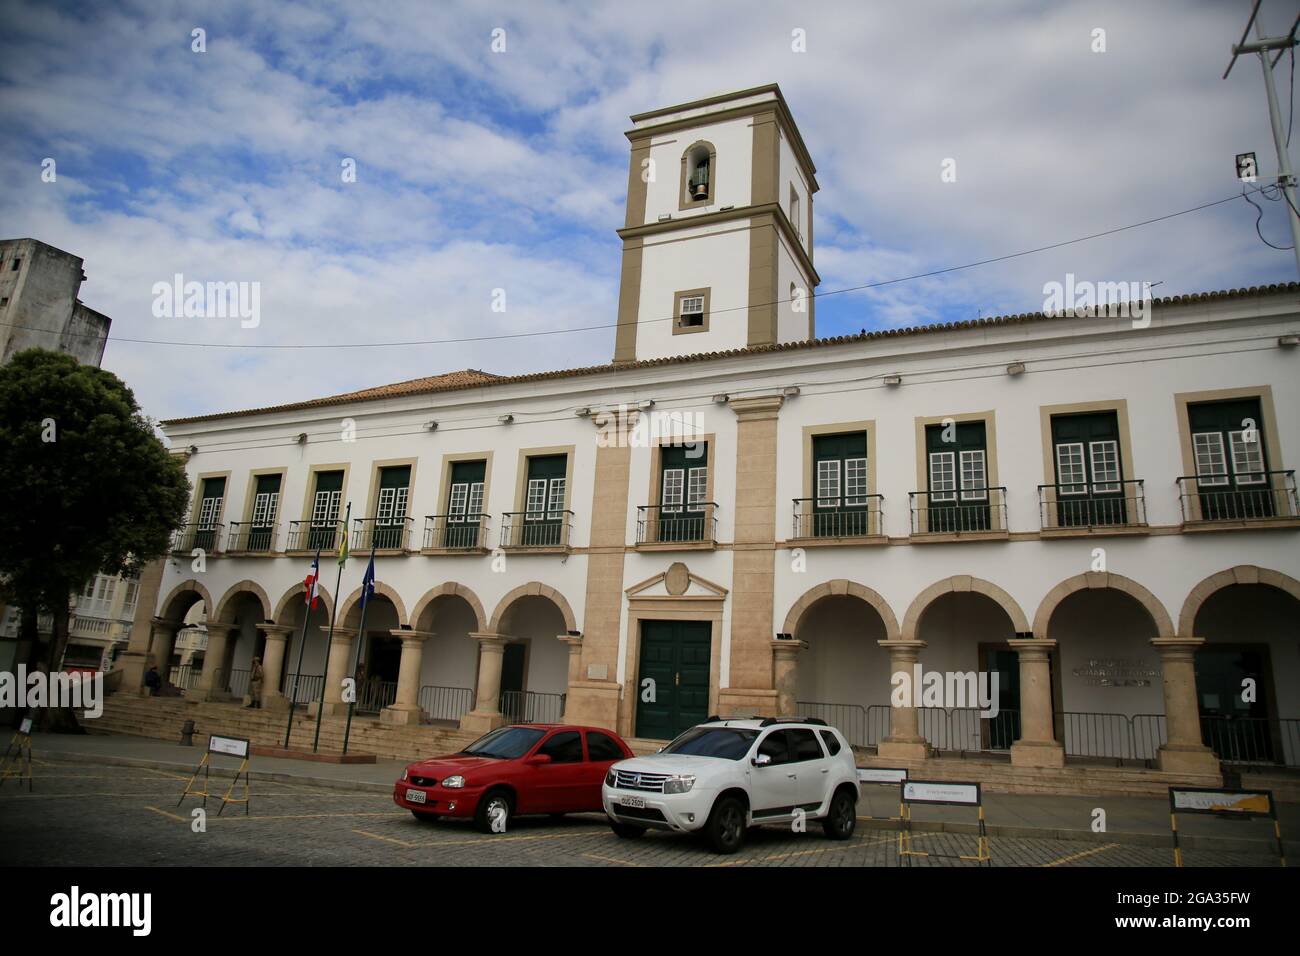 salvador, bahia, brazil - july 27, 2021: view of the Santa Casa da Misericordia da Bahia in the Historic Center of the city of Salvador. Stock Photo